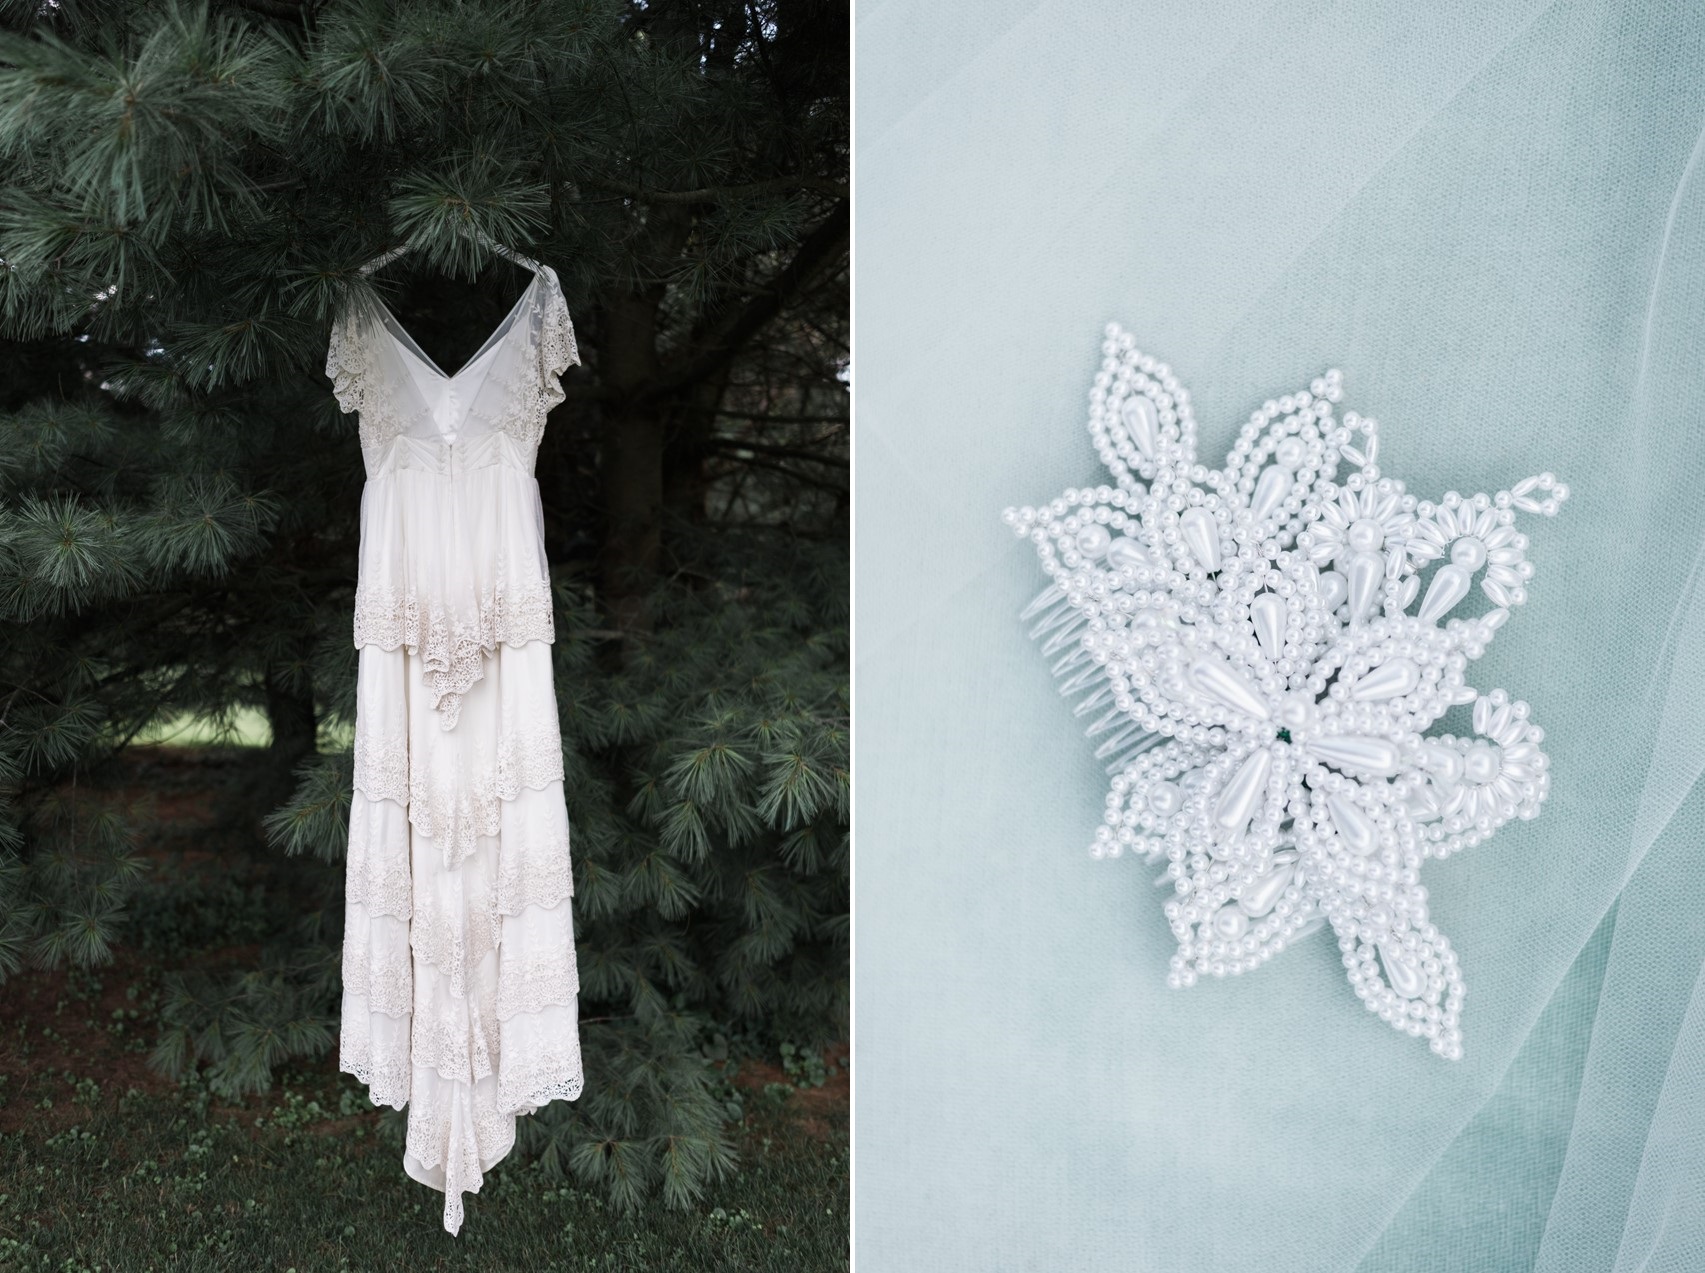 Vintage Inspired Wedding Dress & Pearl Hair Adornment